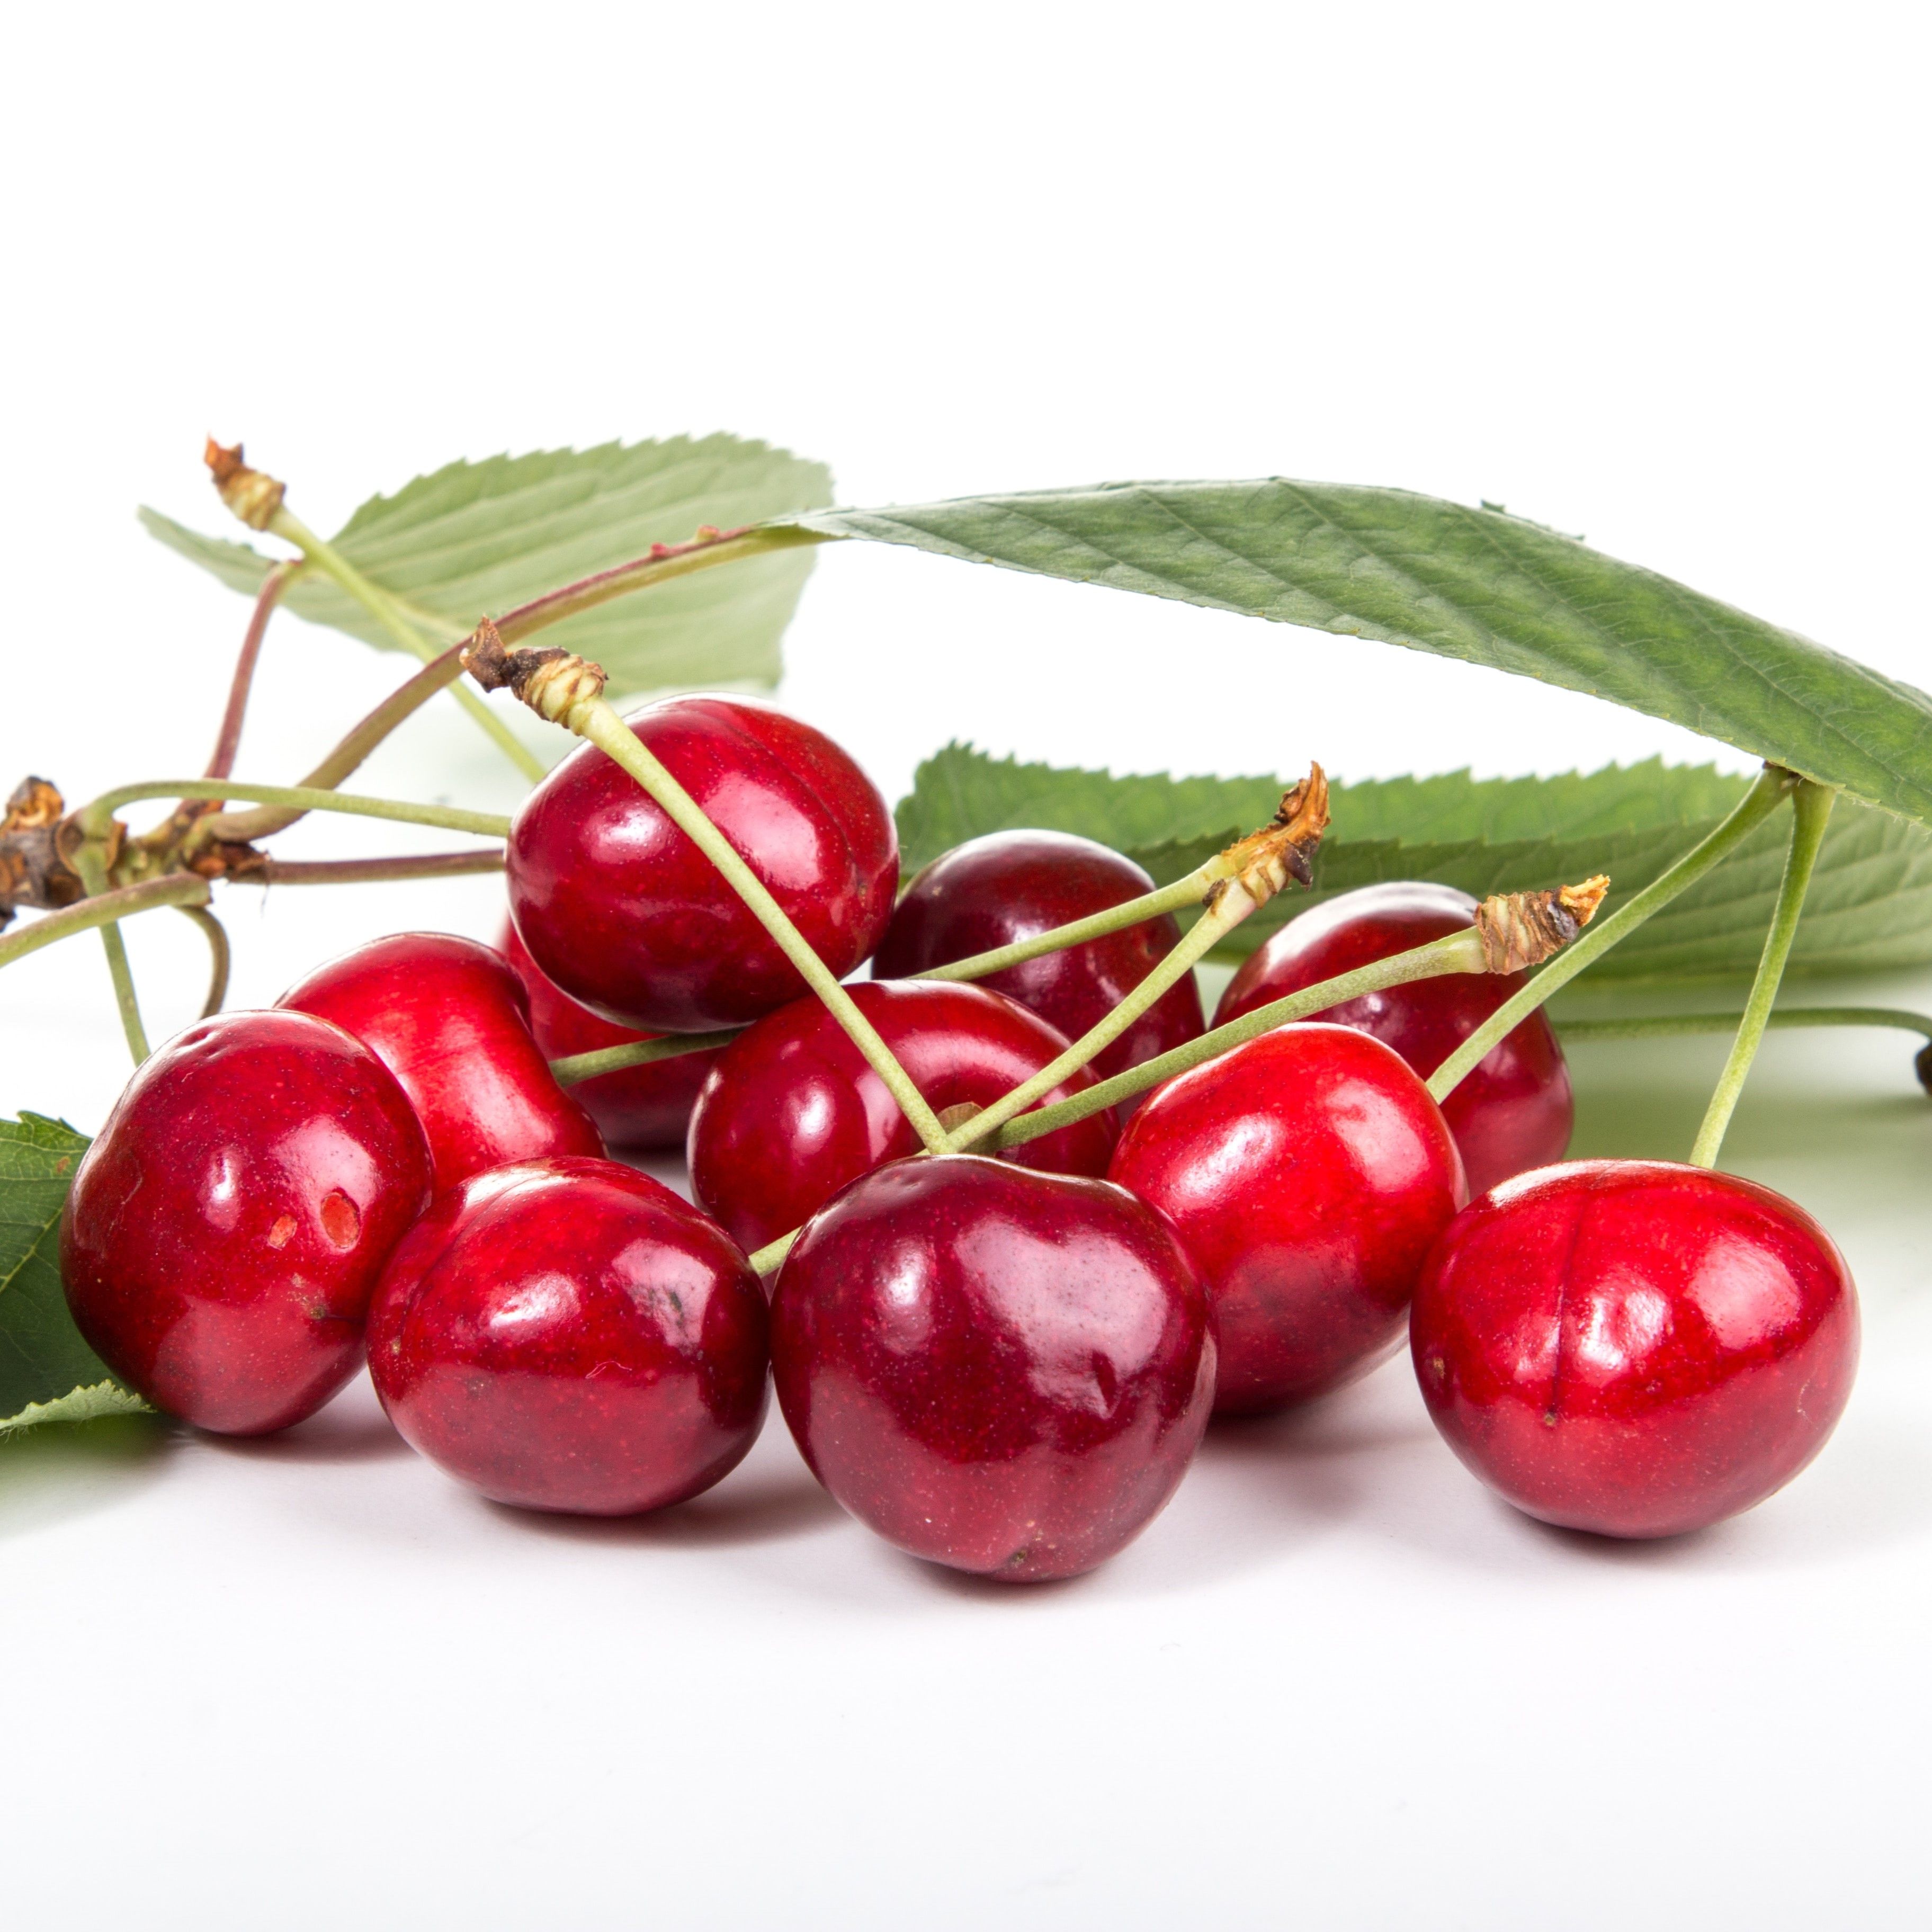 Tart Cherry fruit image